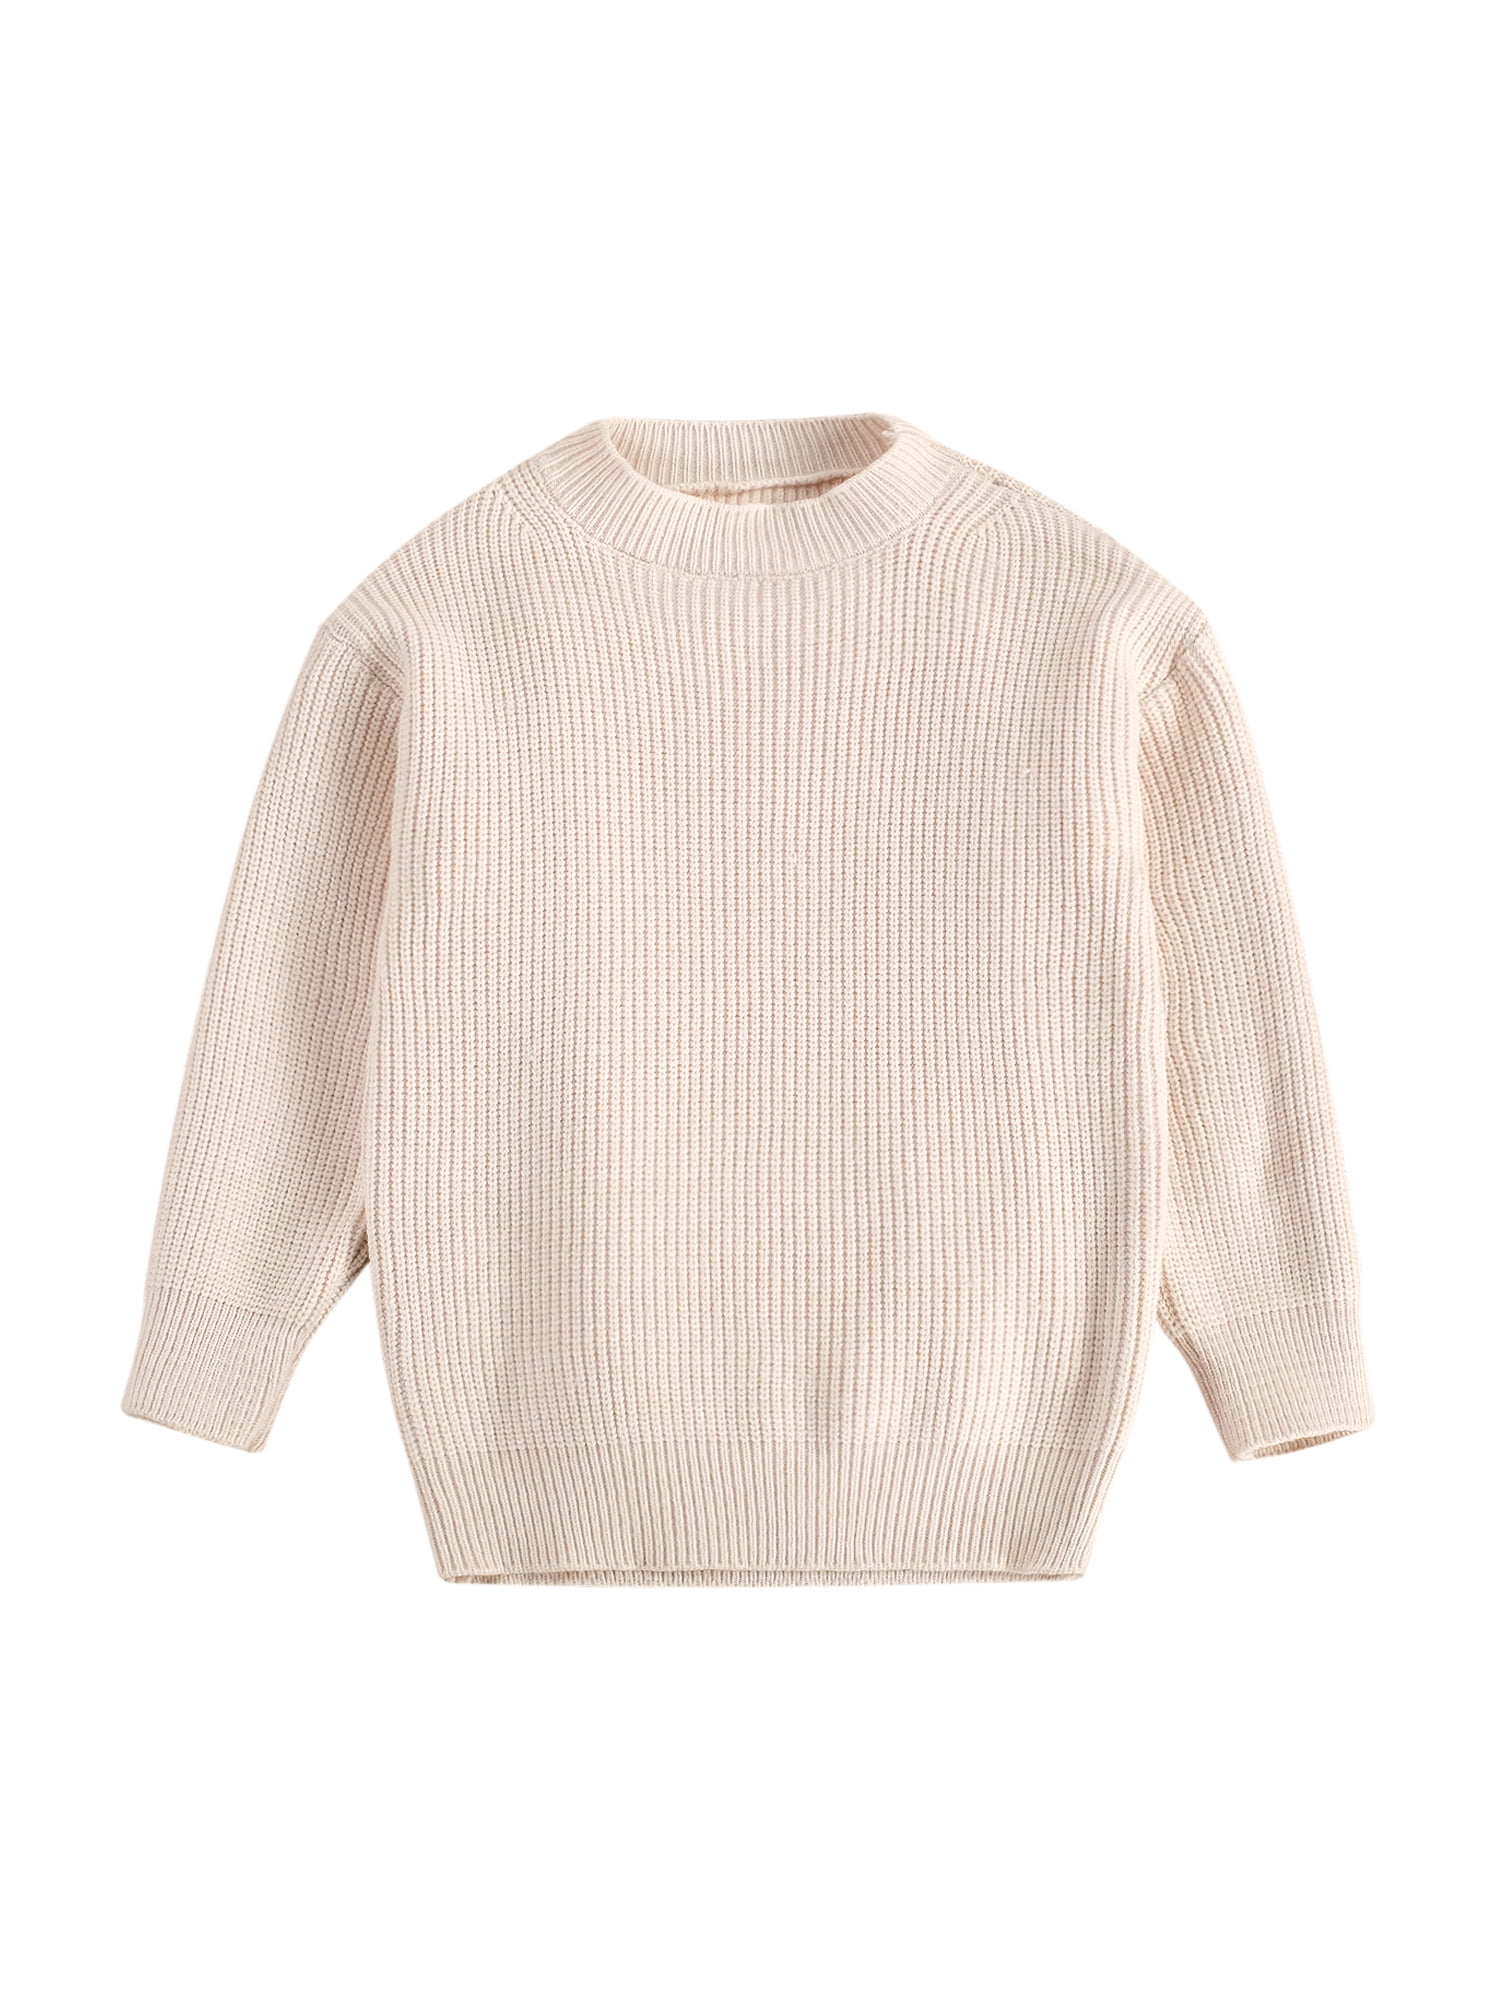 Newborn Kids Girls Boys Knitted Sweater Long Sleeve Sweatshirt Warm Crewneck Tops Autumn Winter Outfits Clothes